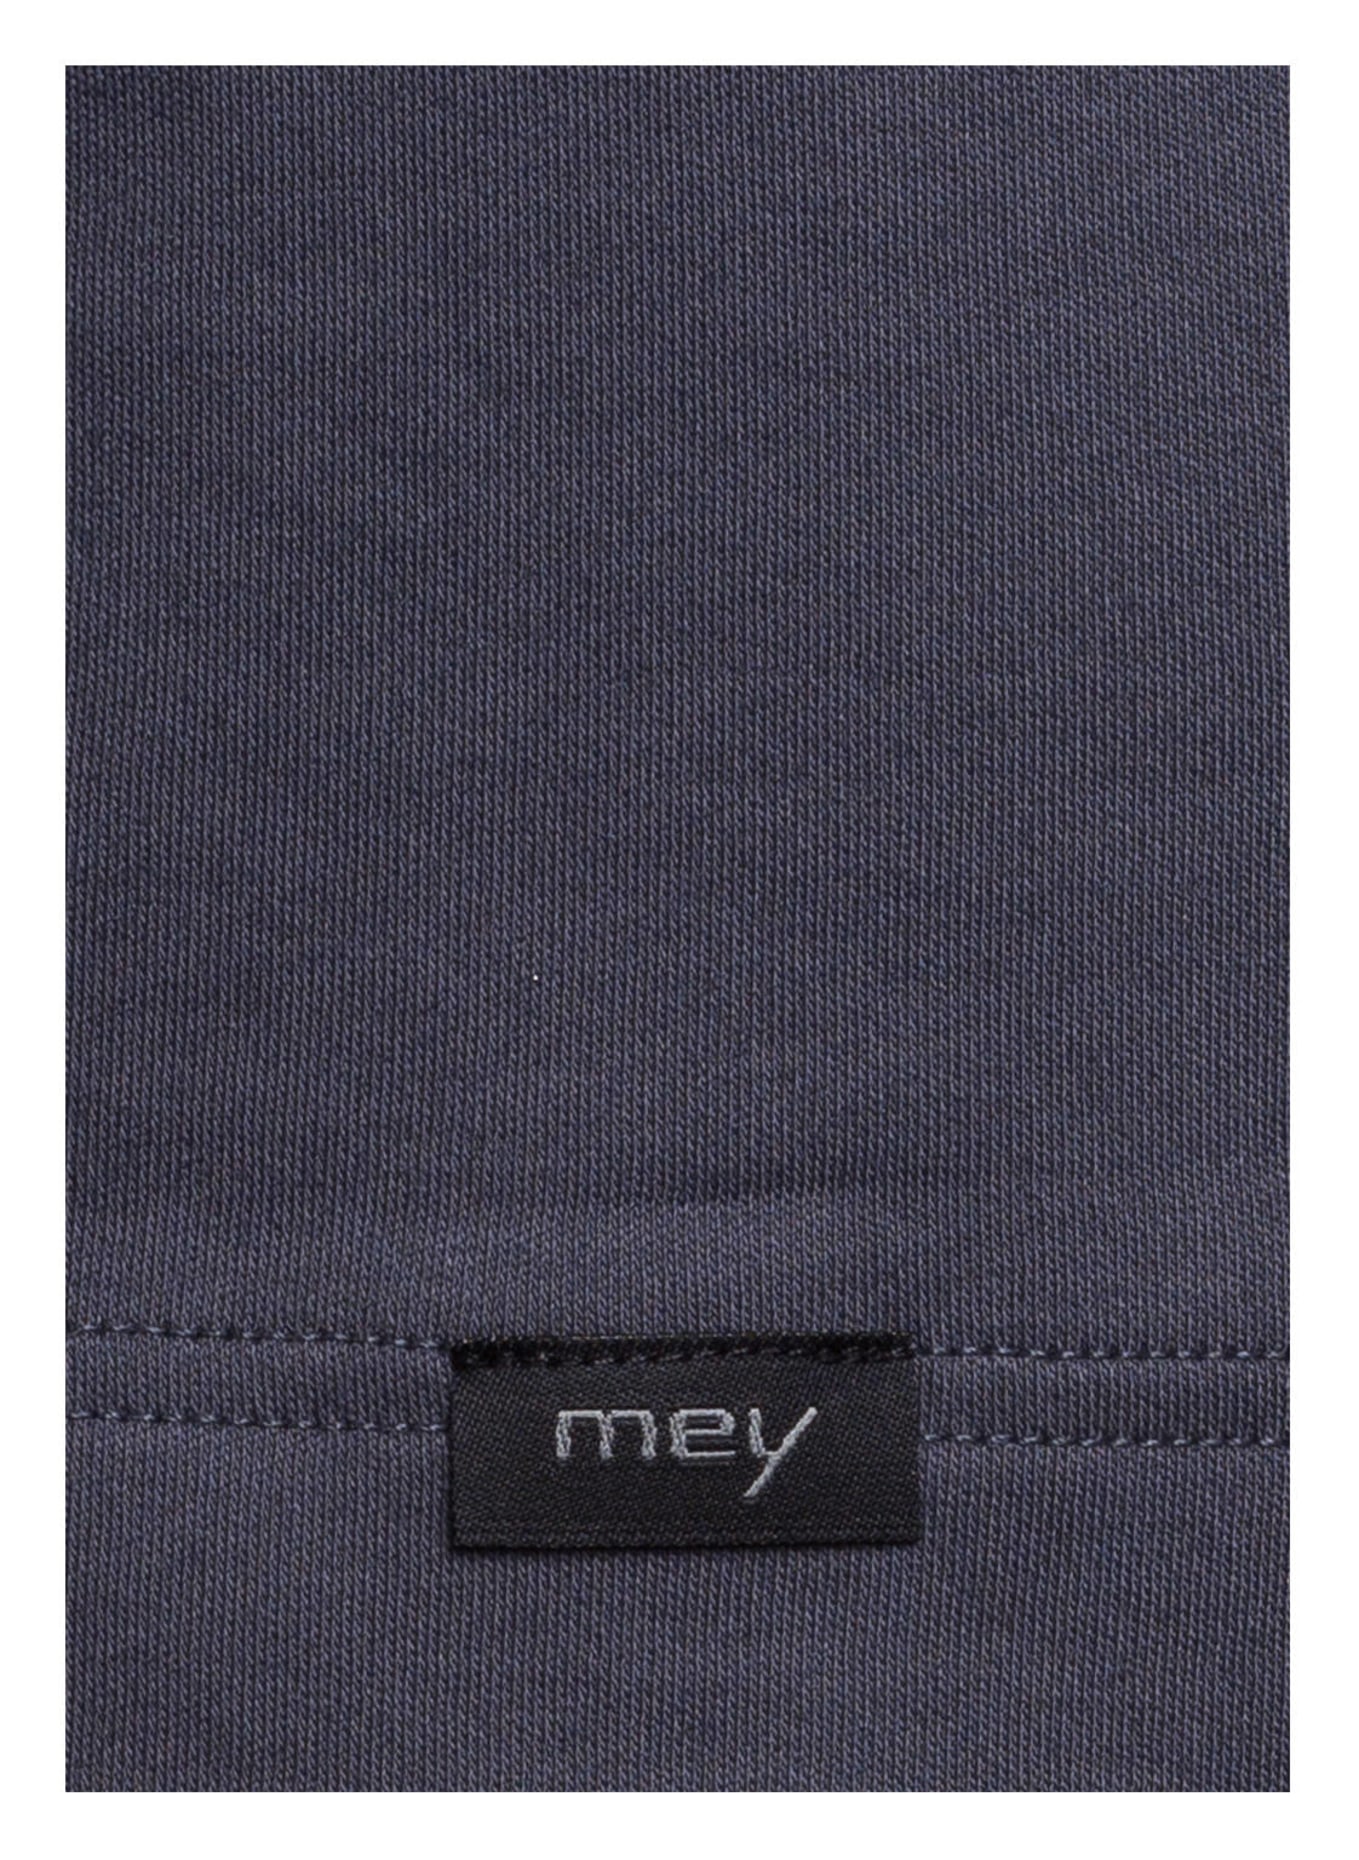 mey Lounge shirt BASIC LOUNGE series, Color: GRAY (Image 3)